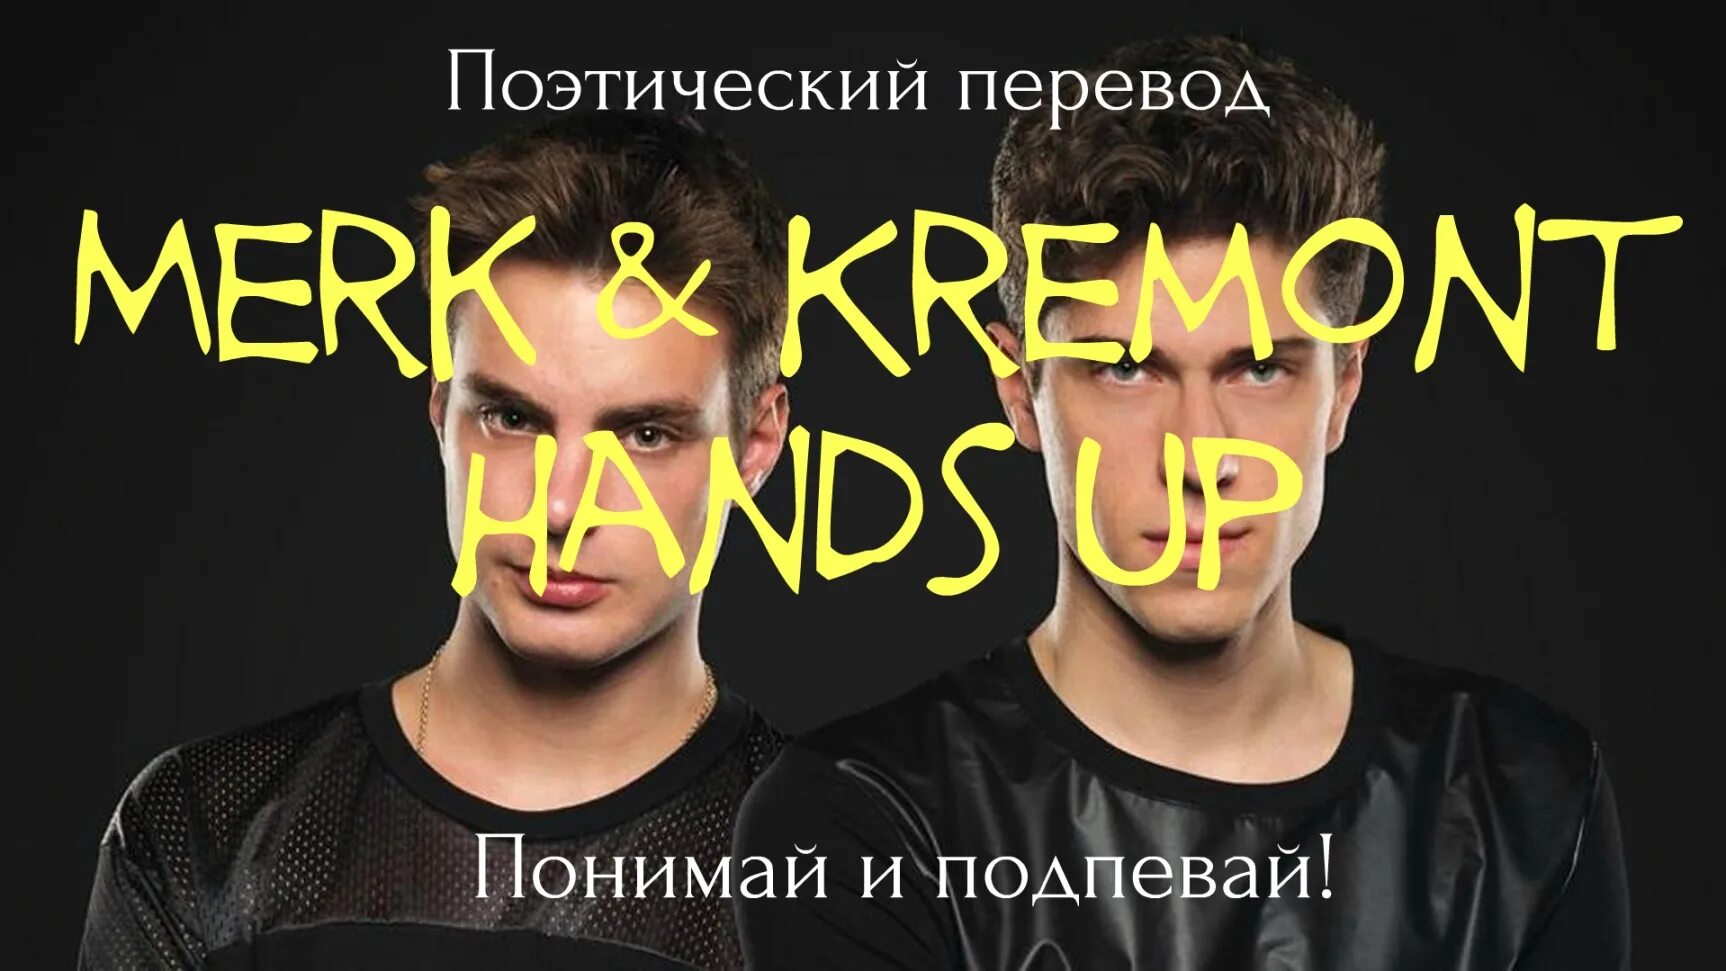 Merk Kremont hands. Hands up перевод. Hands up merk Kremont. Hands up на русском. Б а п песни